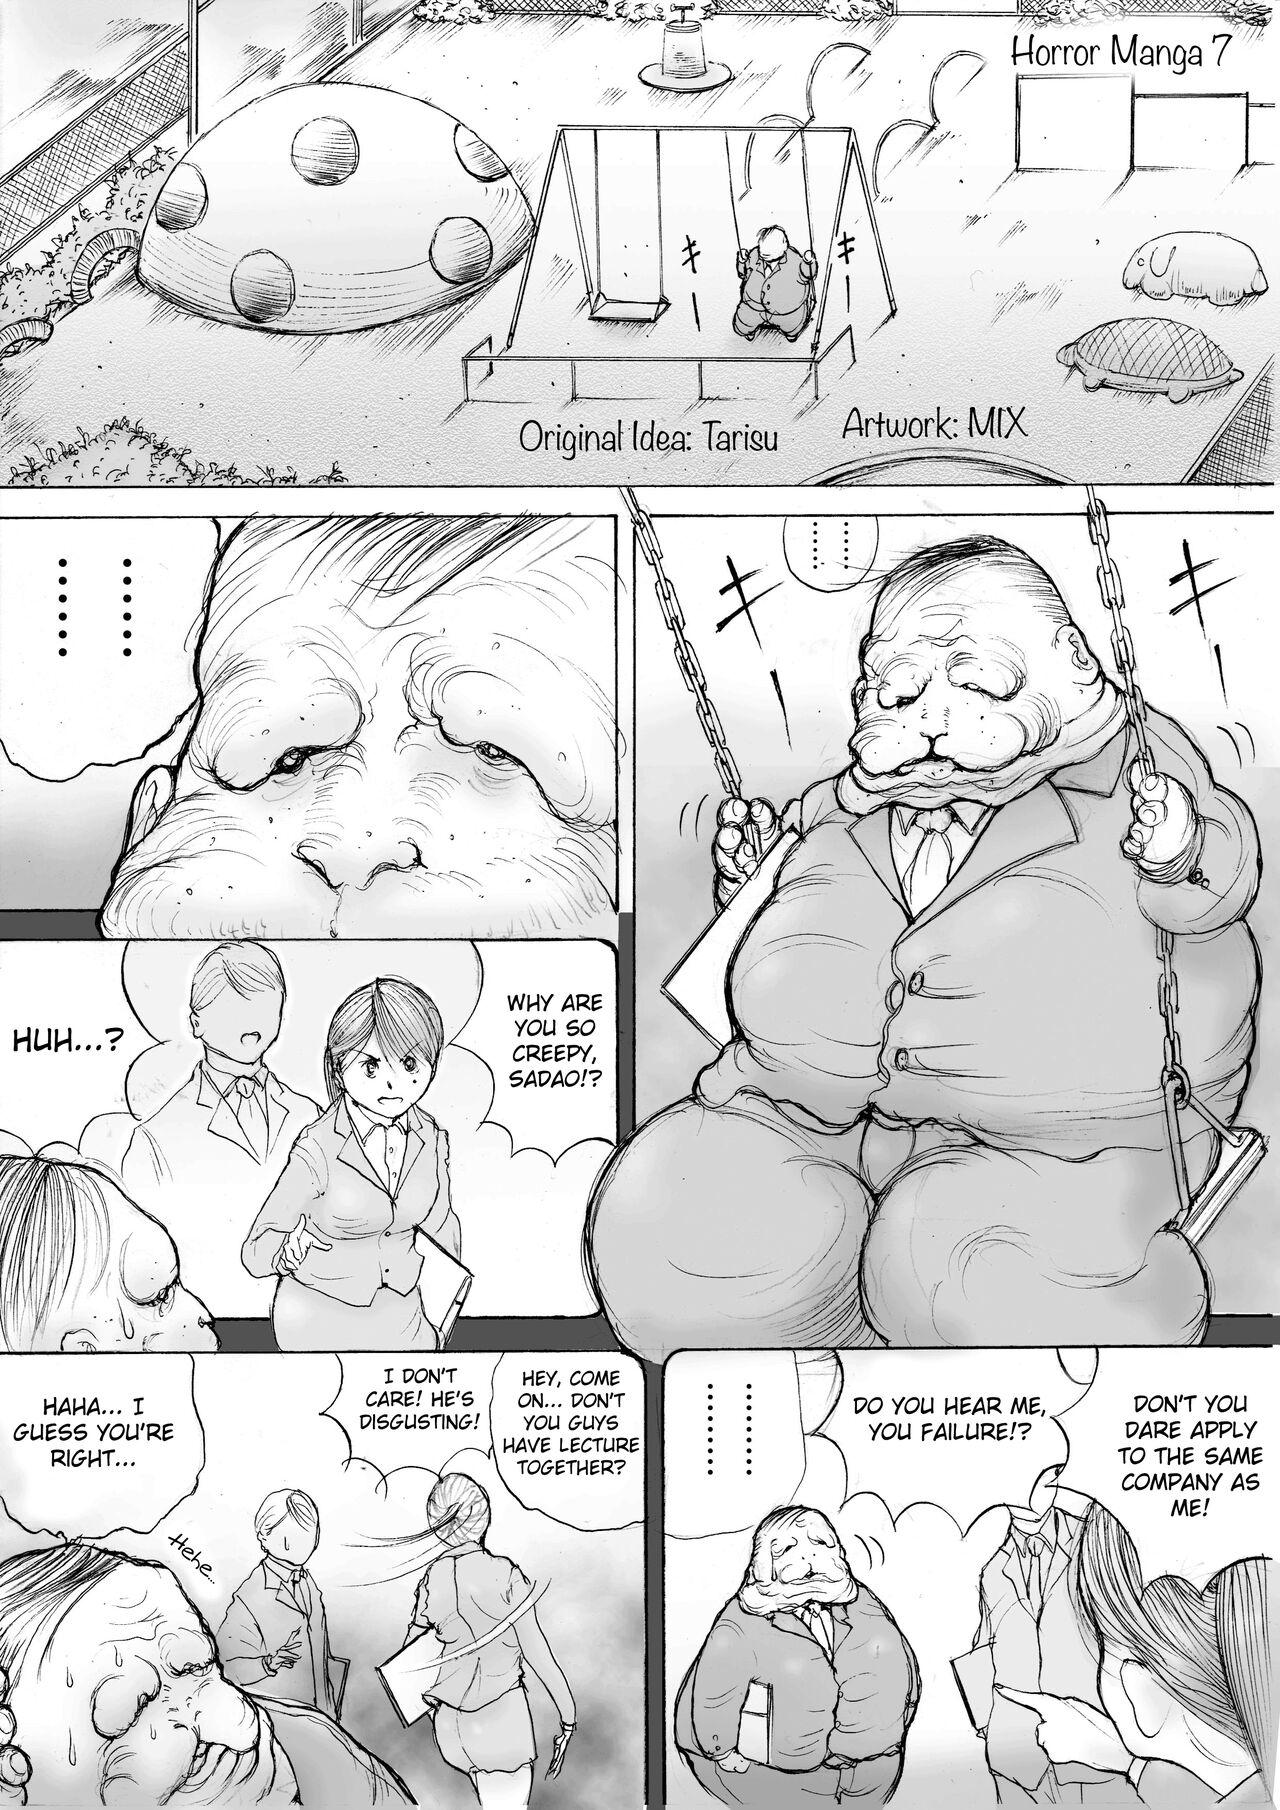 Horror Manga 7 0